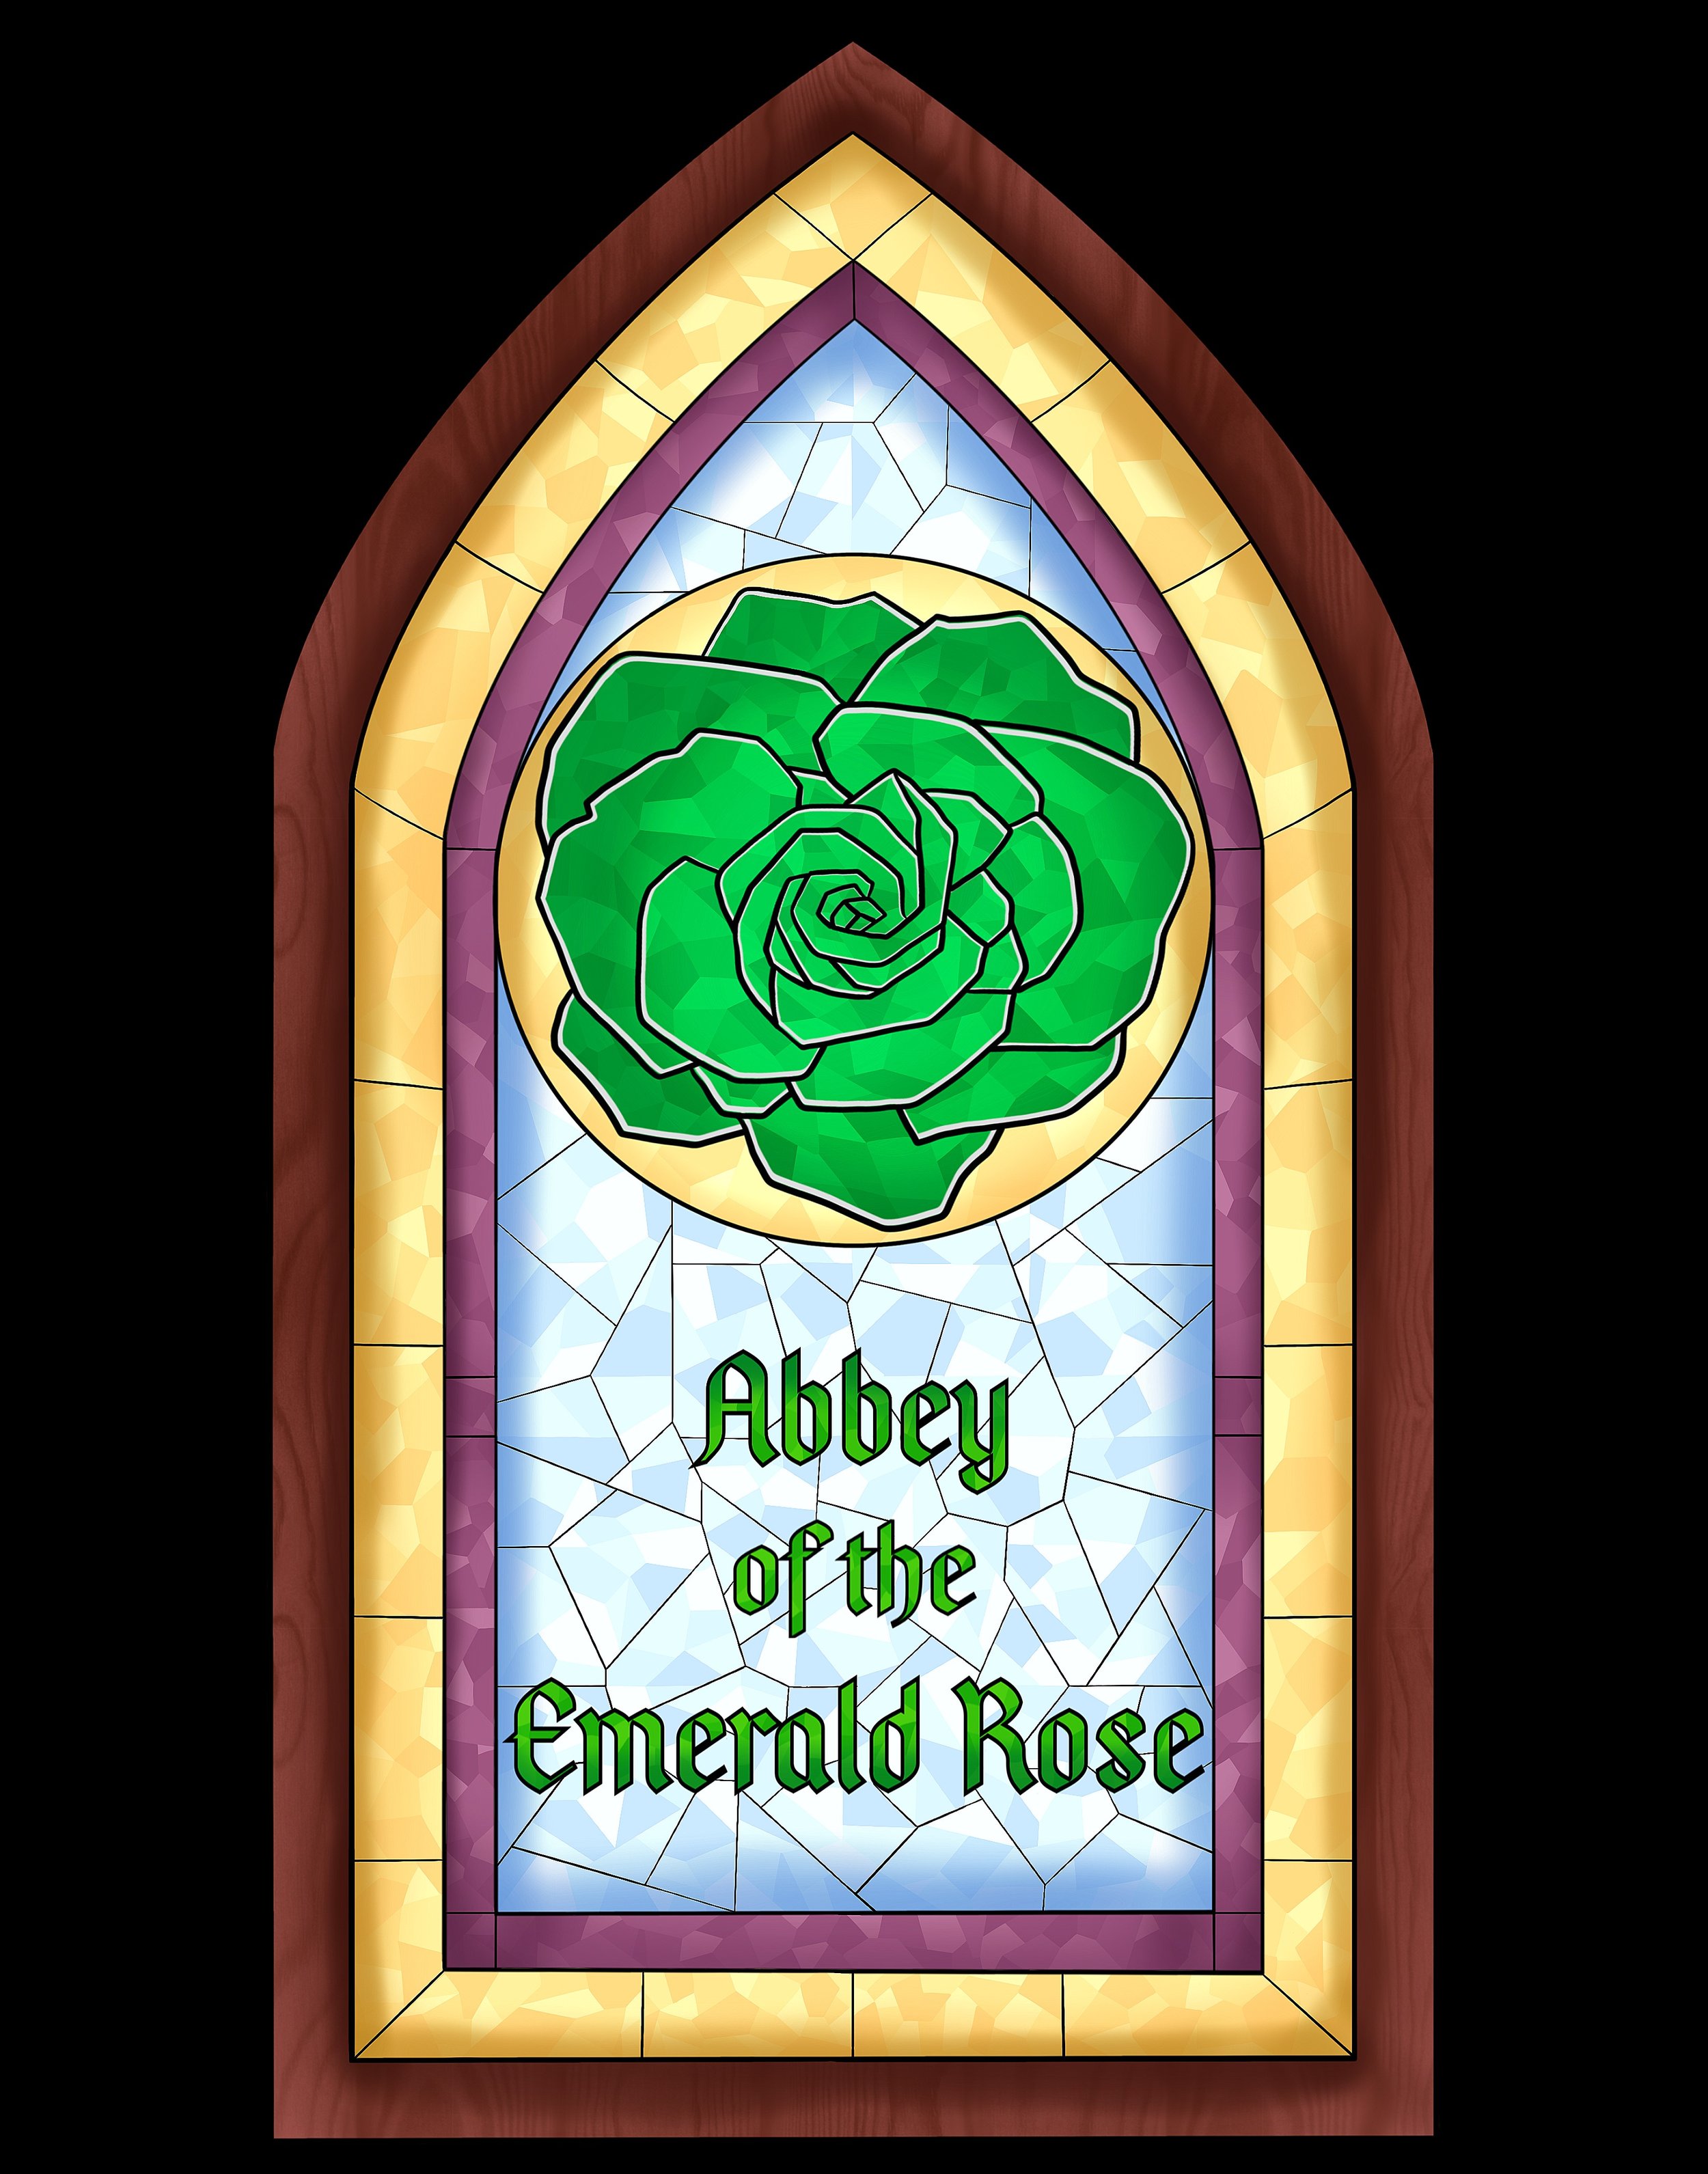 abbey_of_the_emerald_rose_artwork.jpg